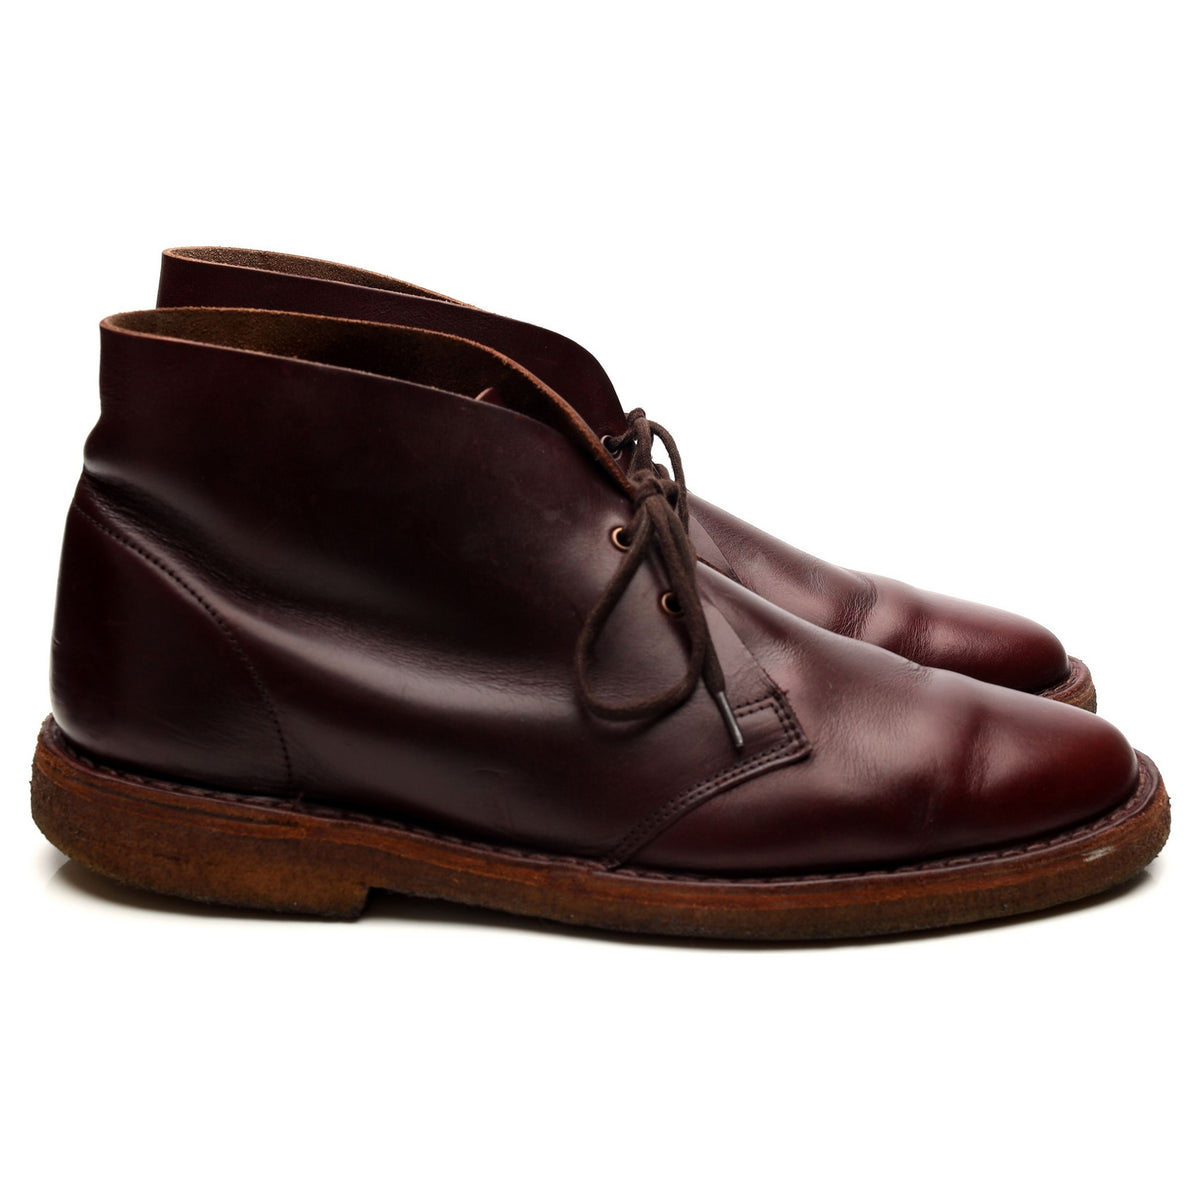 Burgundy Leather Chukka Boots UK 9.5